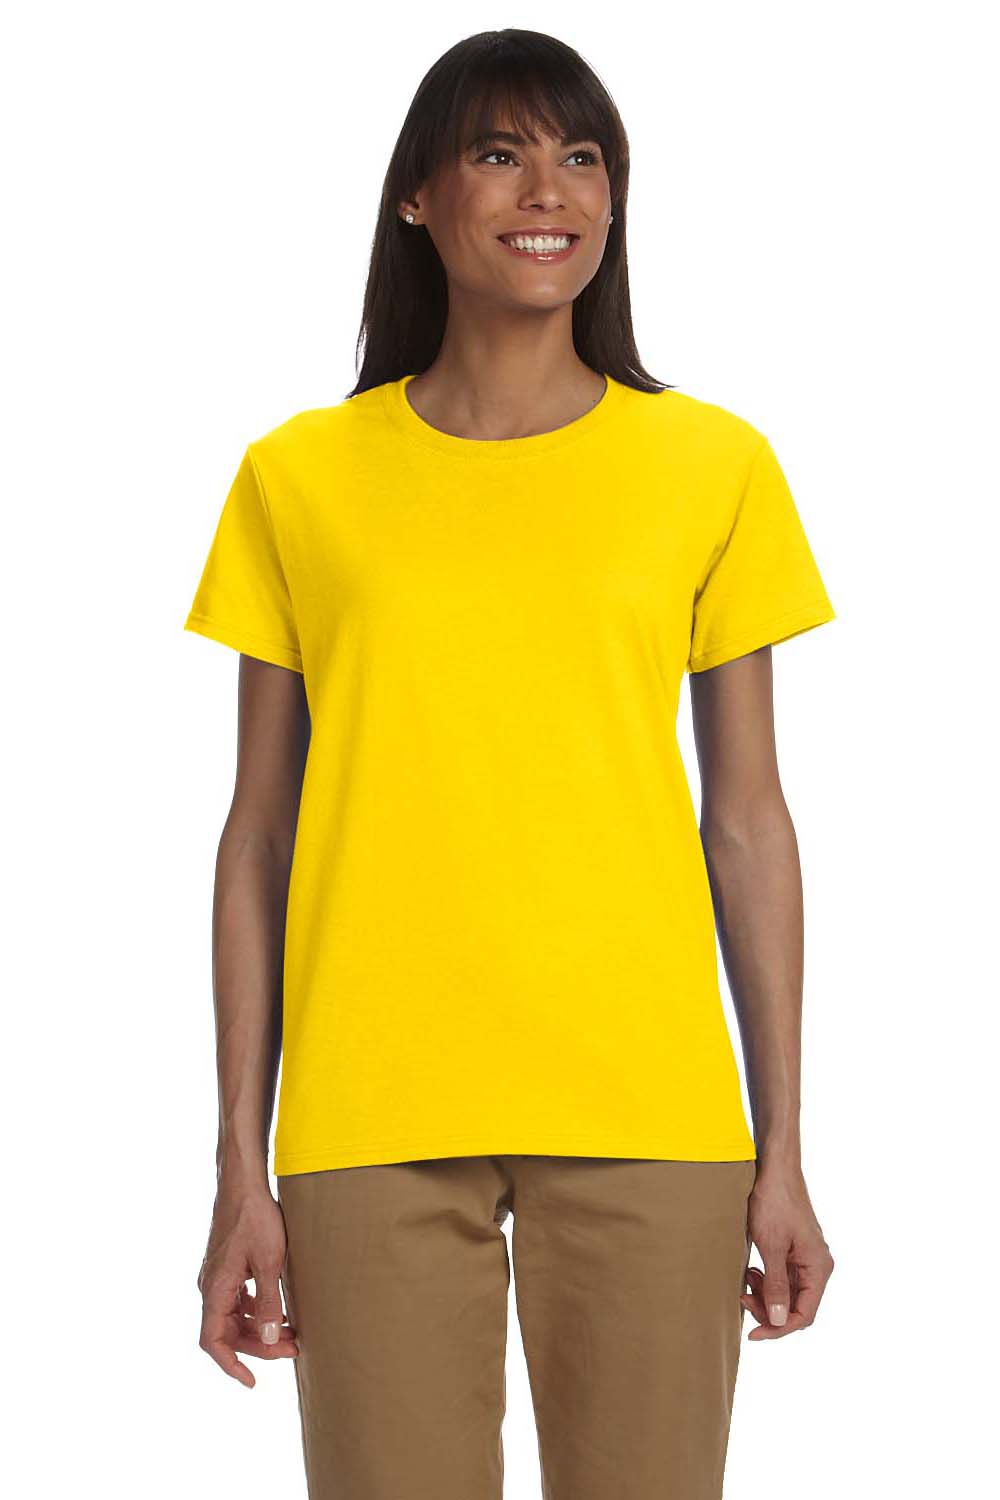 Gildan G200L Womens Ultra Short Sleeve Crewneck T-Shirt Daisy Yellow Front